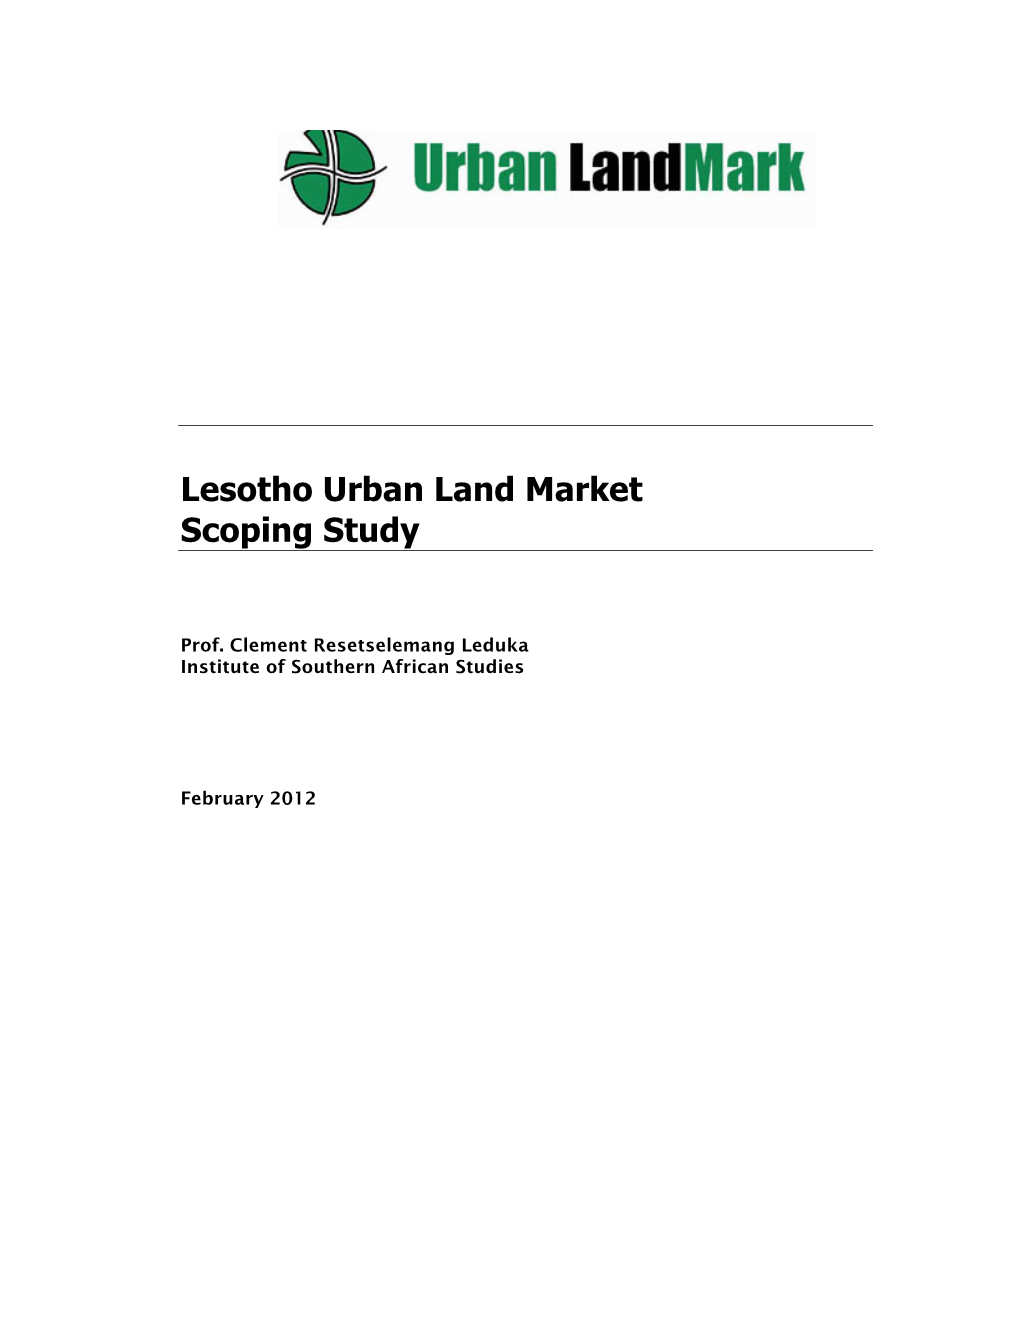 Lesotho Urban Land Market Scoping Study